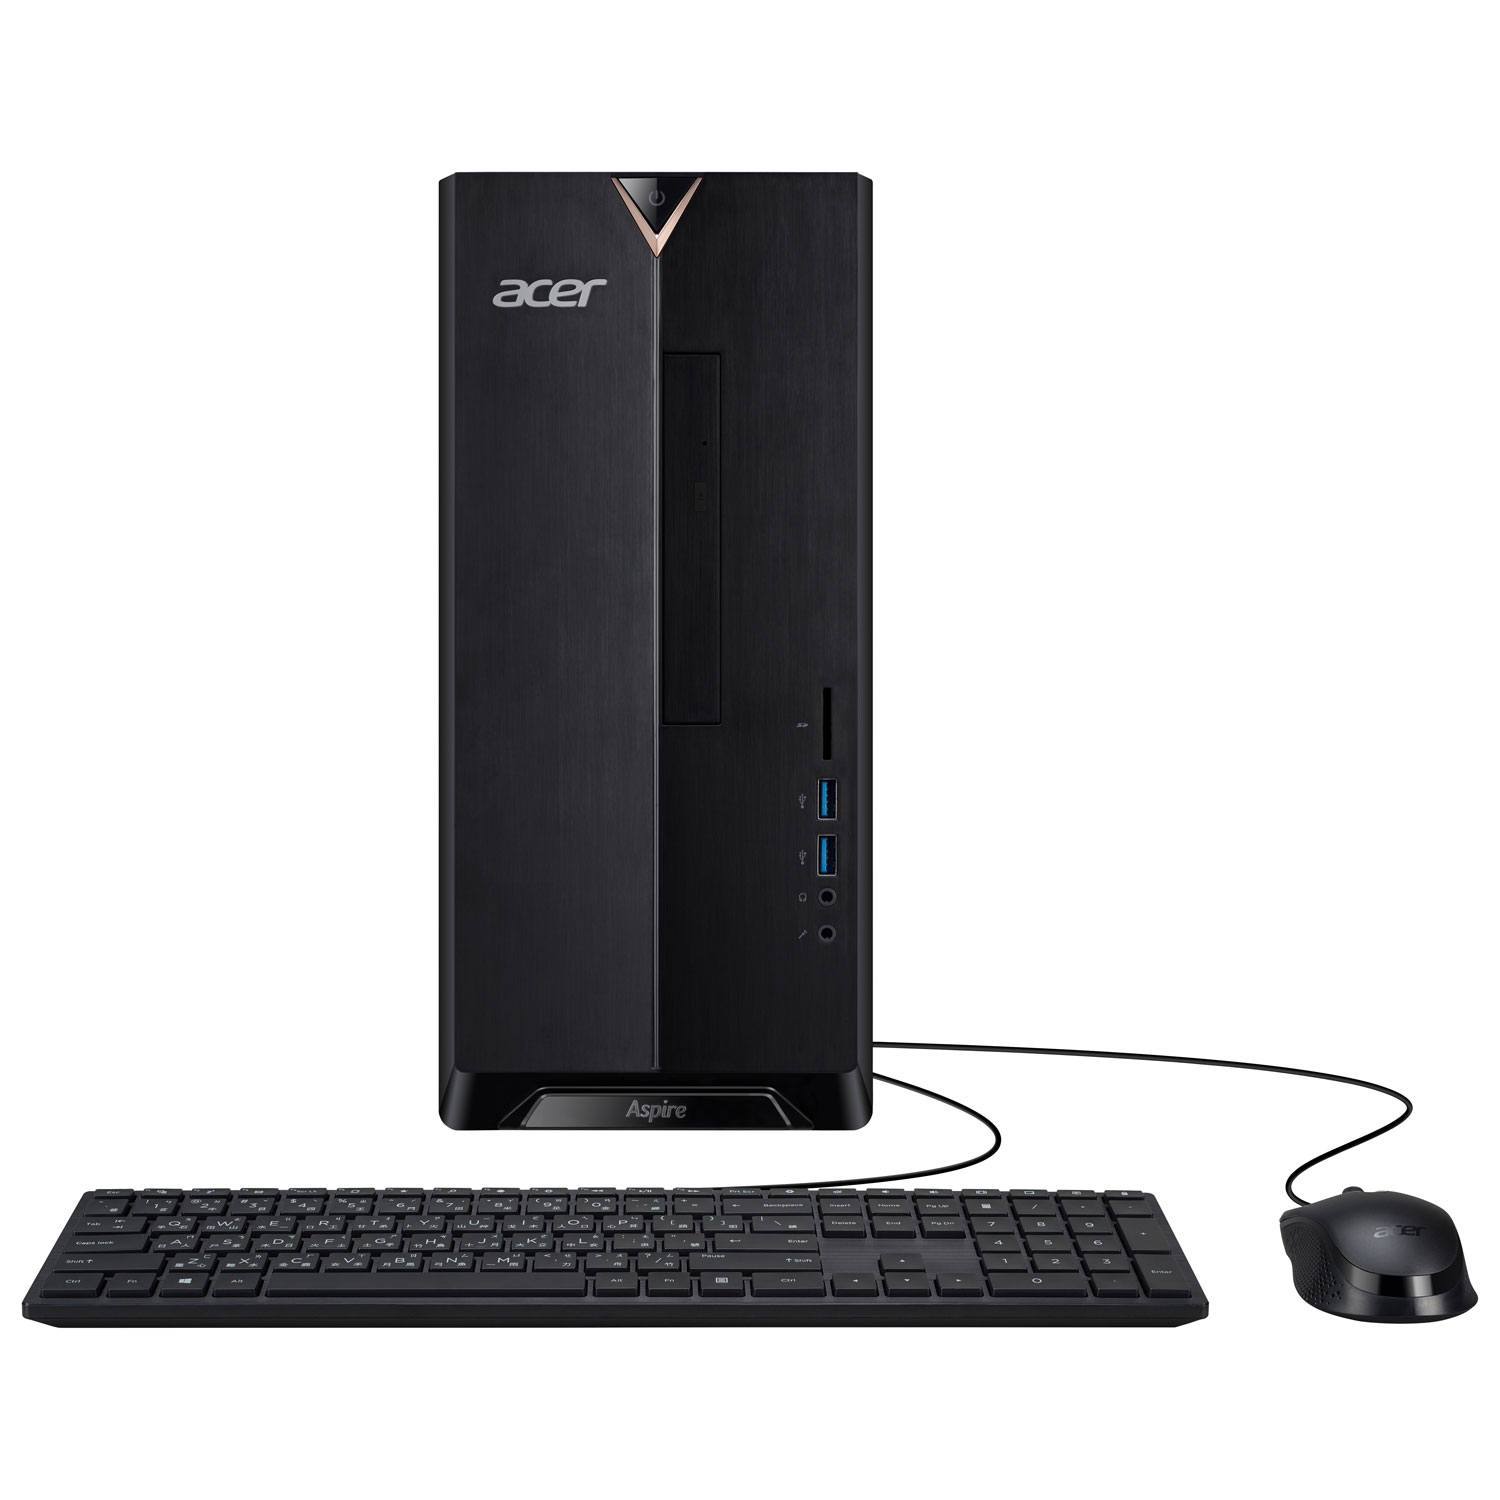 Refurbished (Excellent) - Acer Aspire XC Desktop (Intel Pentium Quad Core J5040/1TB HDD/8GB RAM) - Manufacturer ReCertified w/ 1 Year Warranty